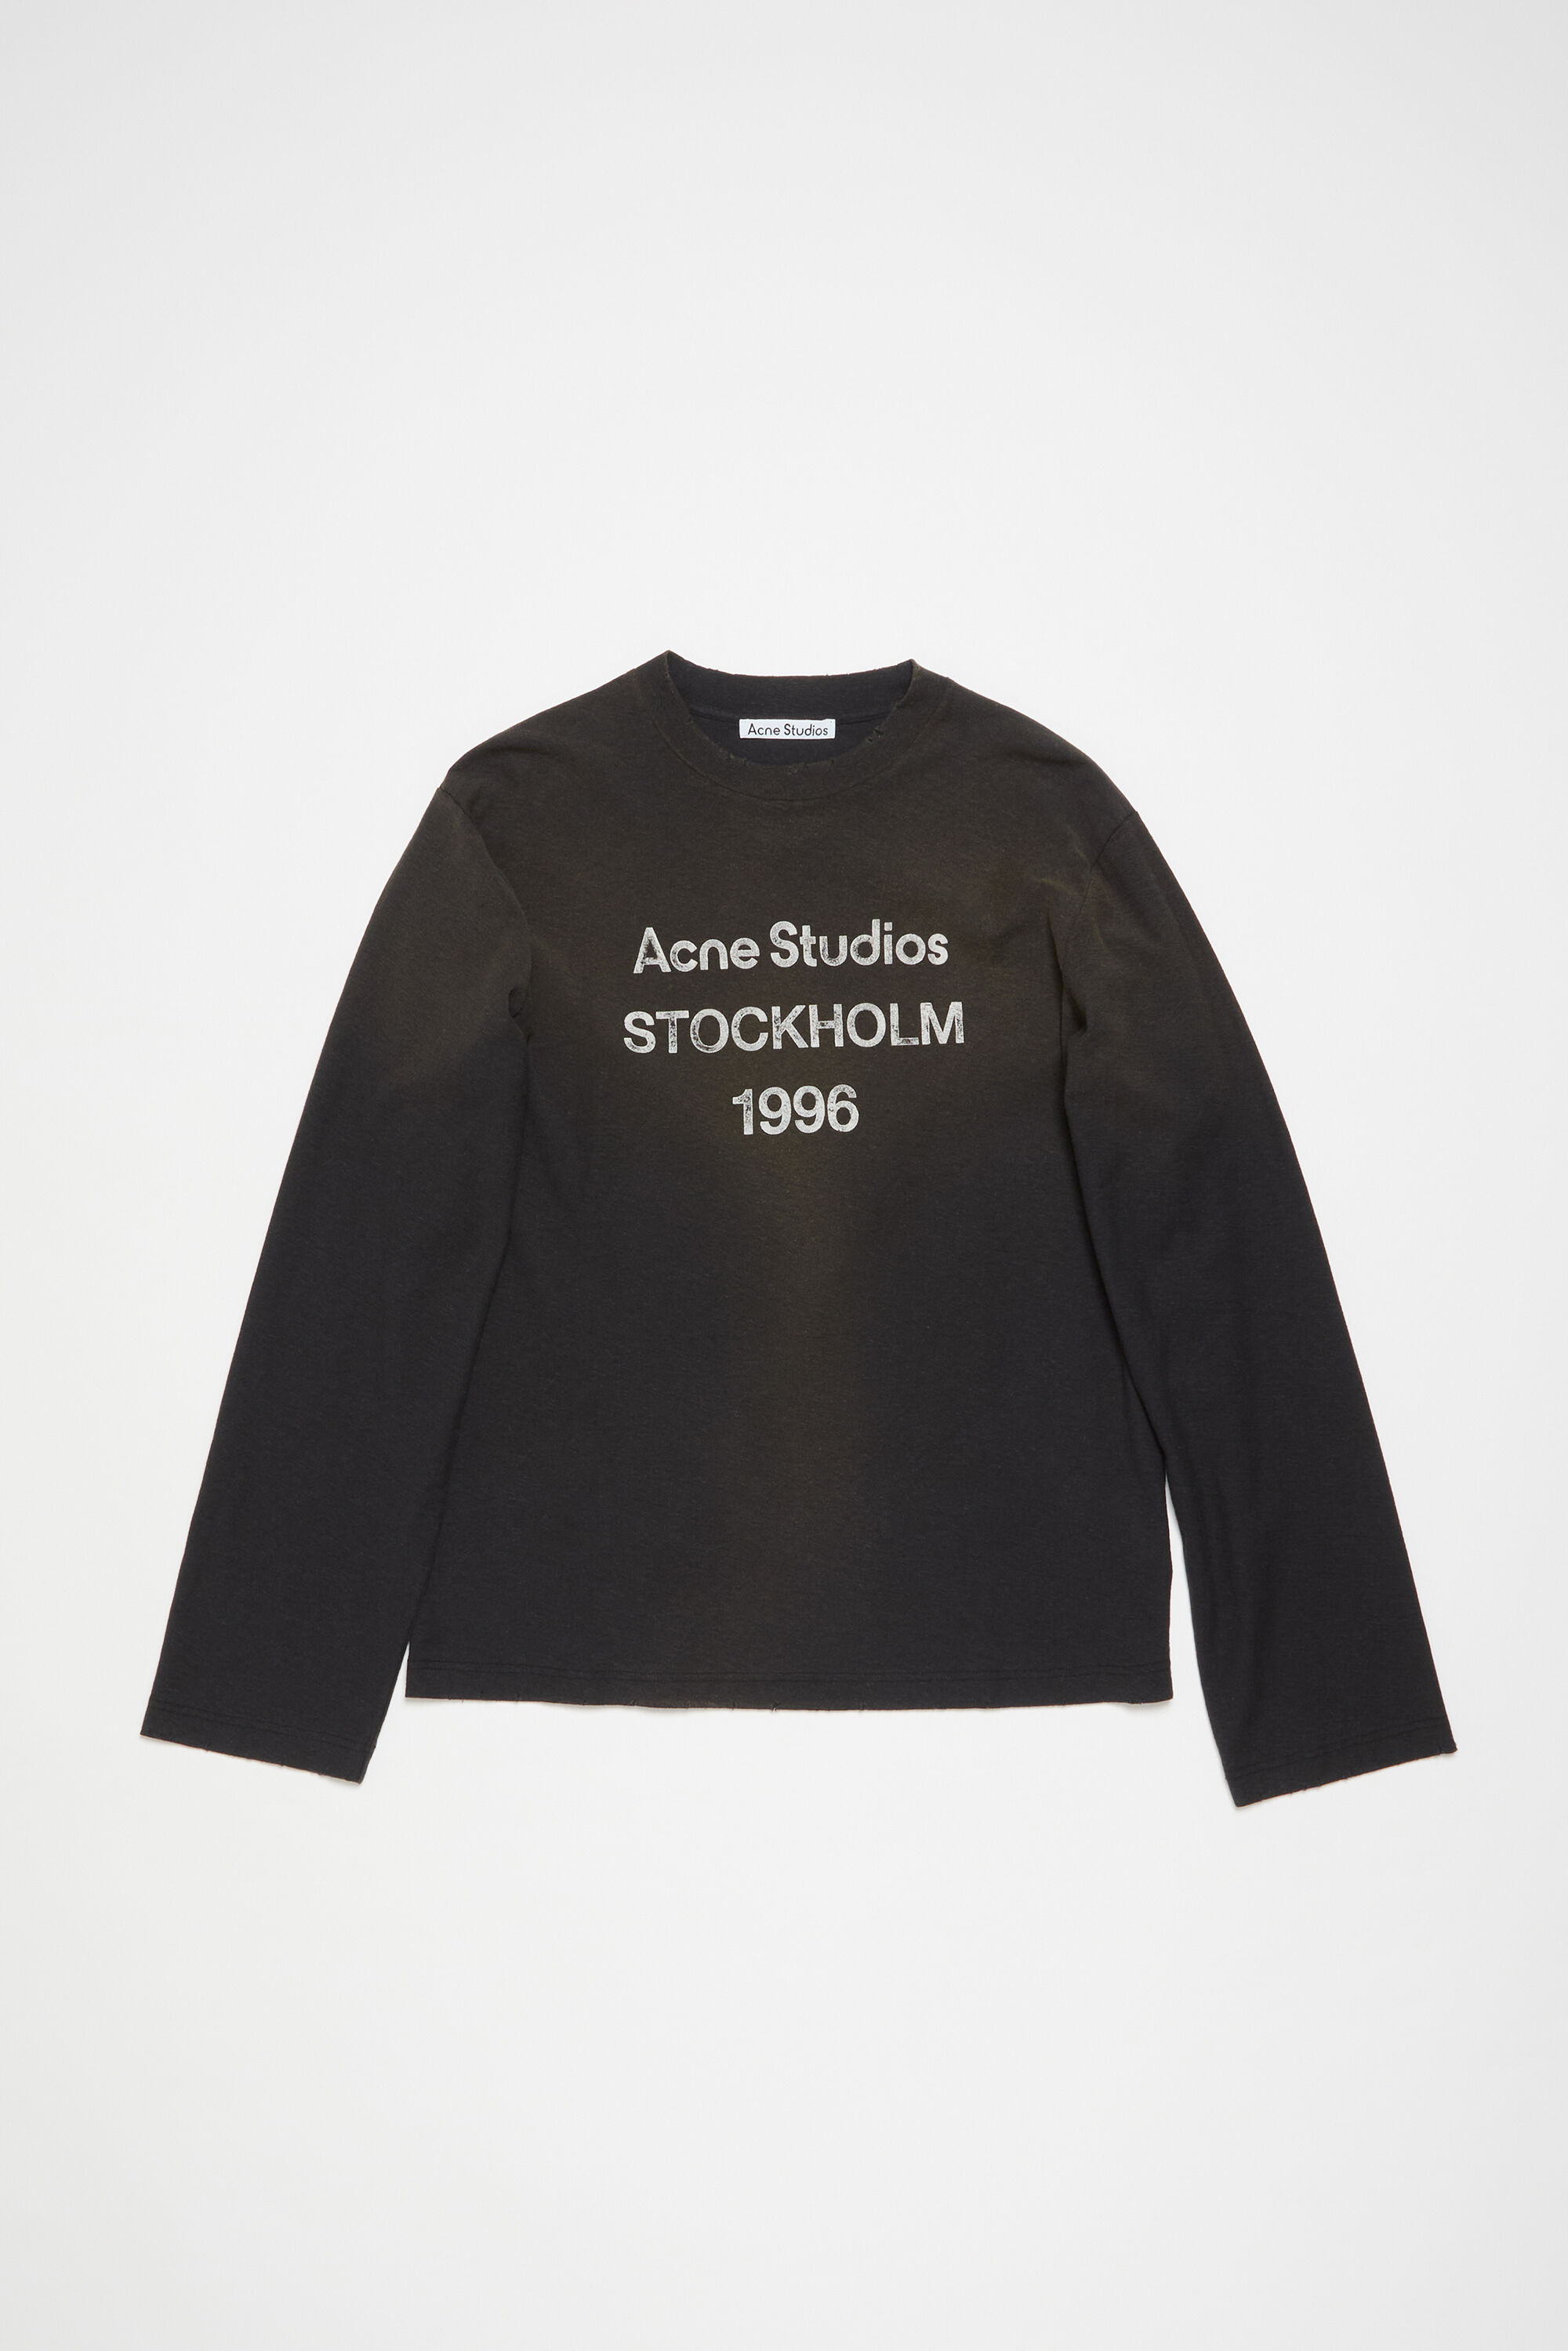 Acne Studios フェイデッドブラックTシャツ定価44000円